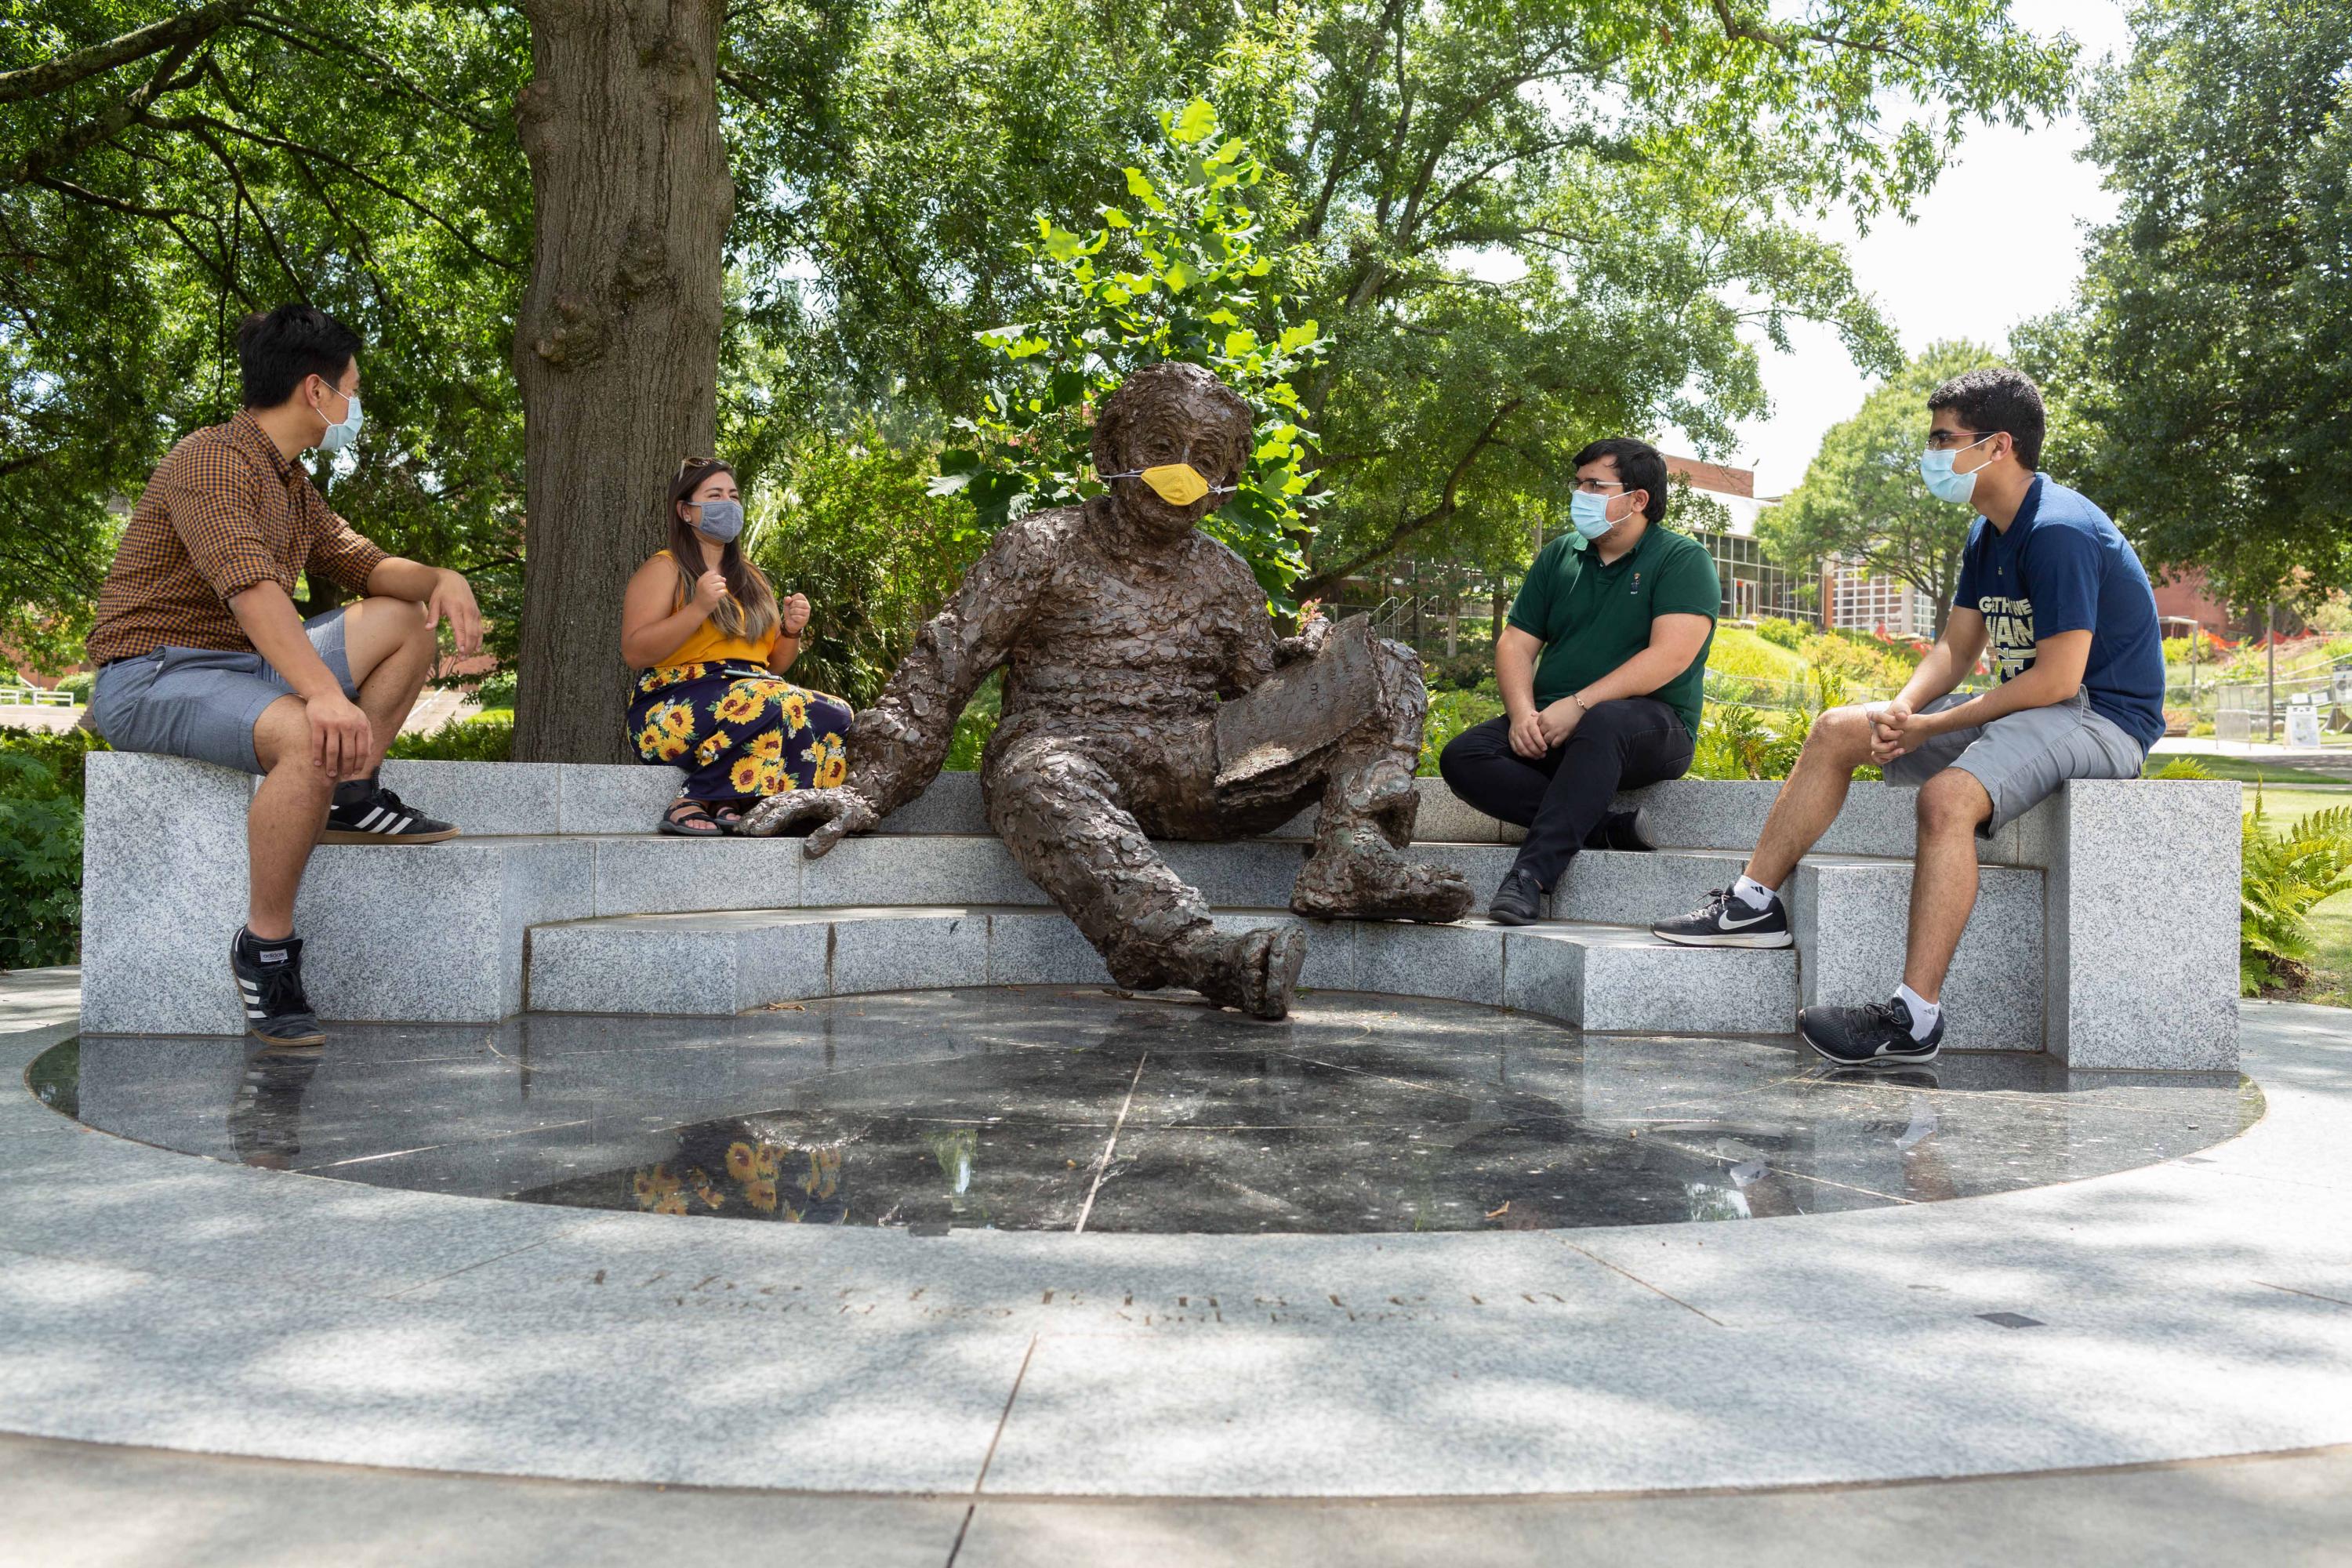 Students gathered around the Einstein statue on Georgia Tech’s campus in Atlanta. (Photo: Allison Carter)